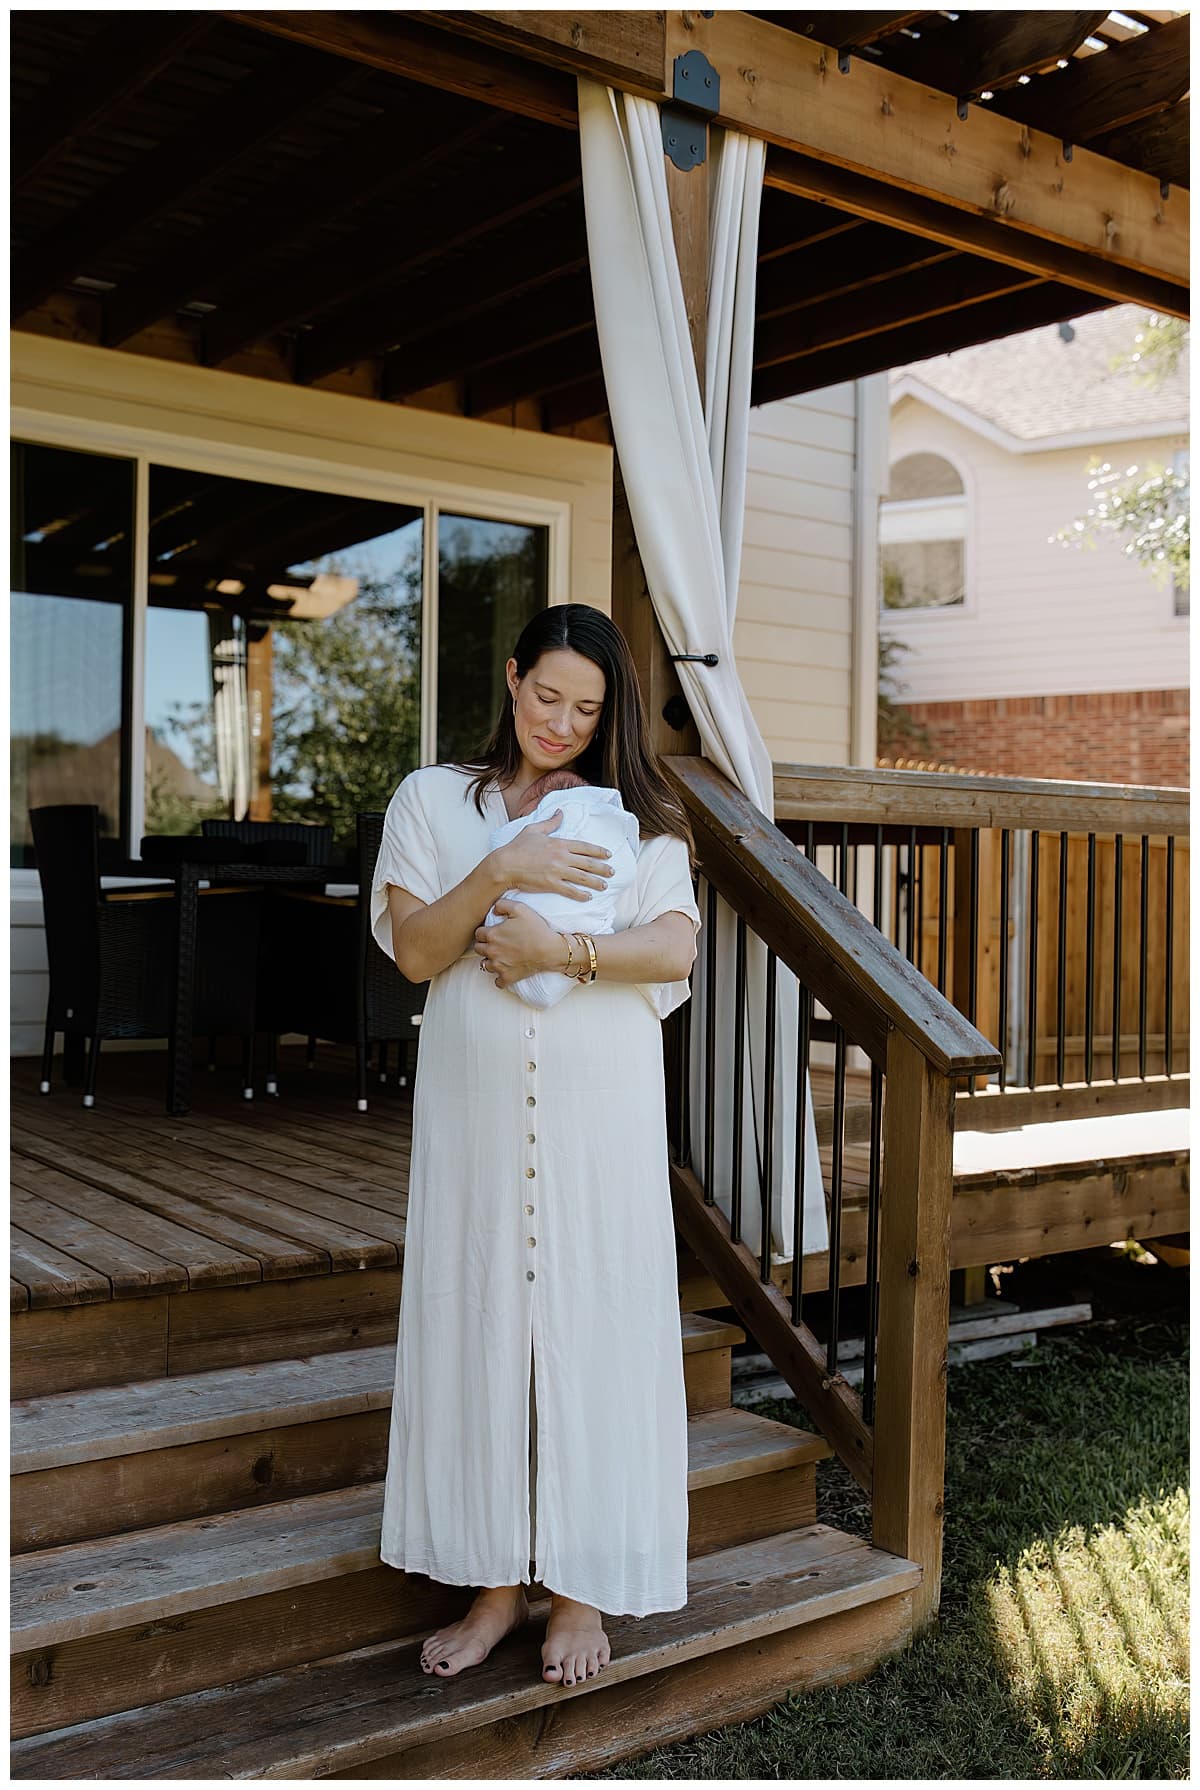 Mom cuddles newborn close for Austin Lifestyle Photographer